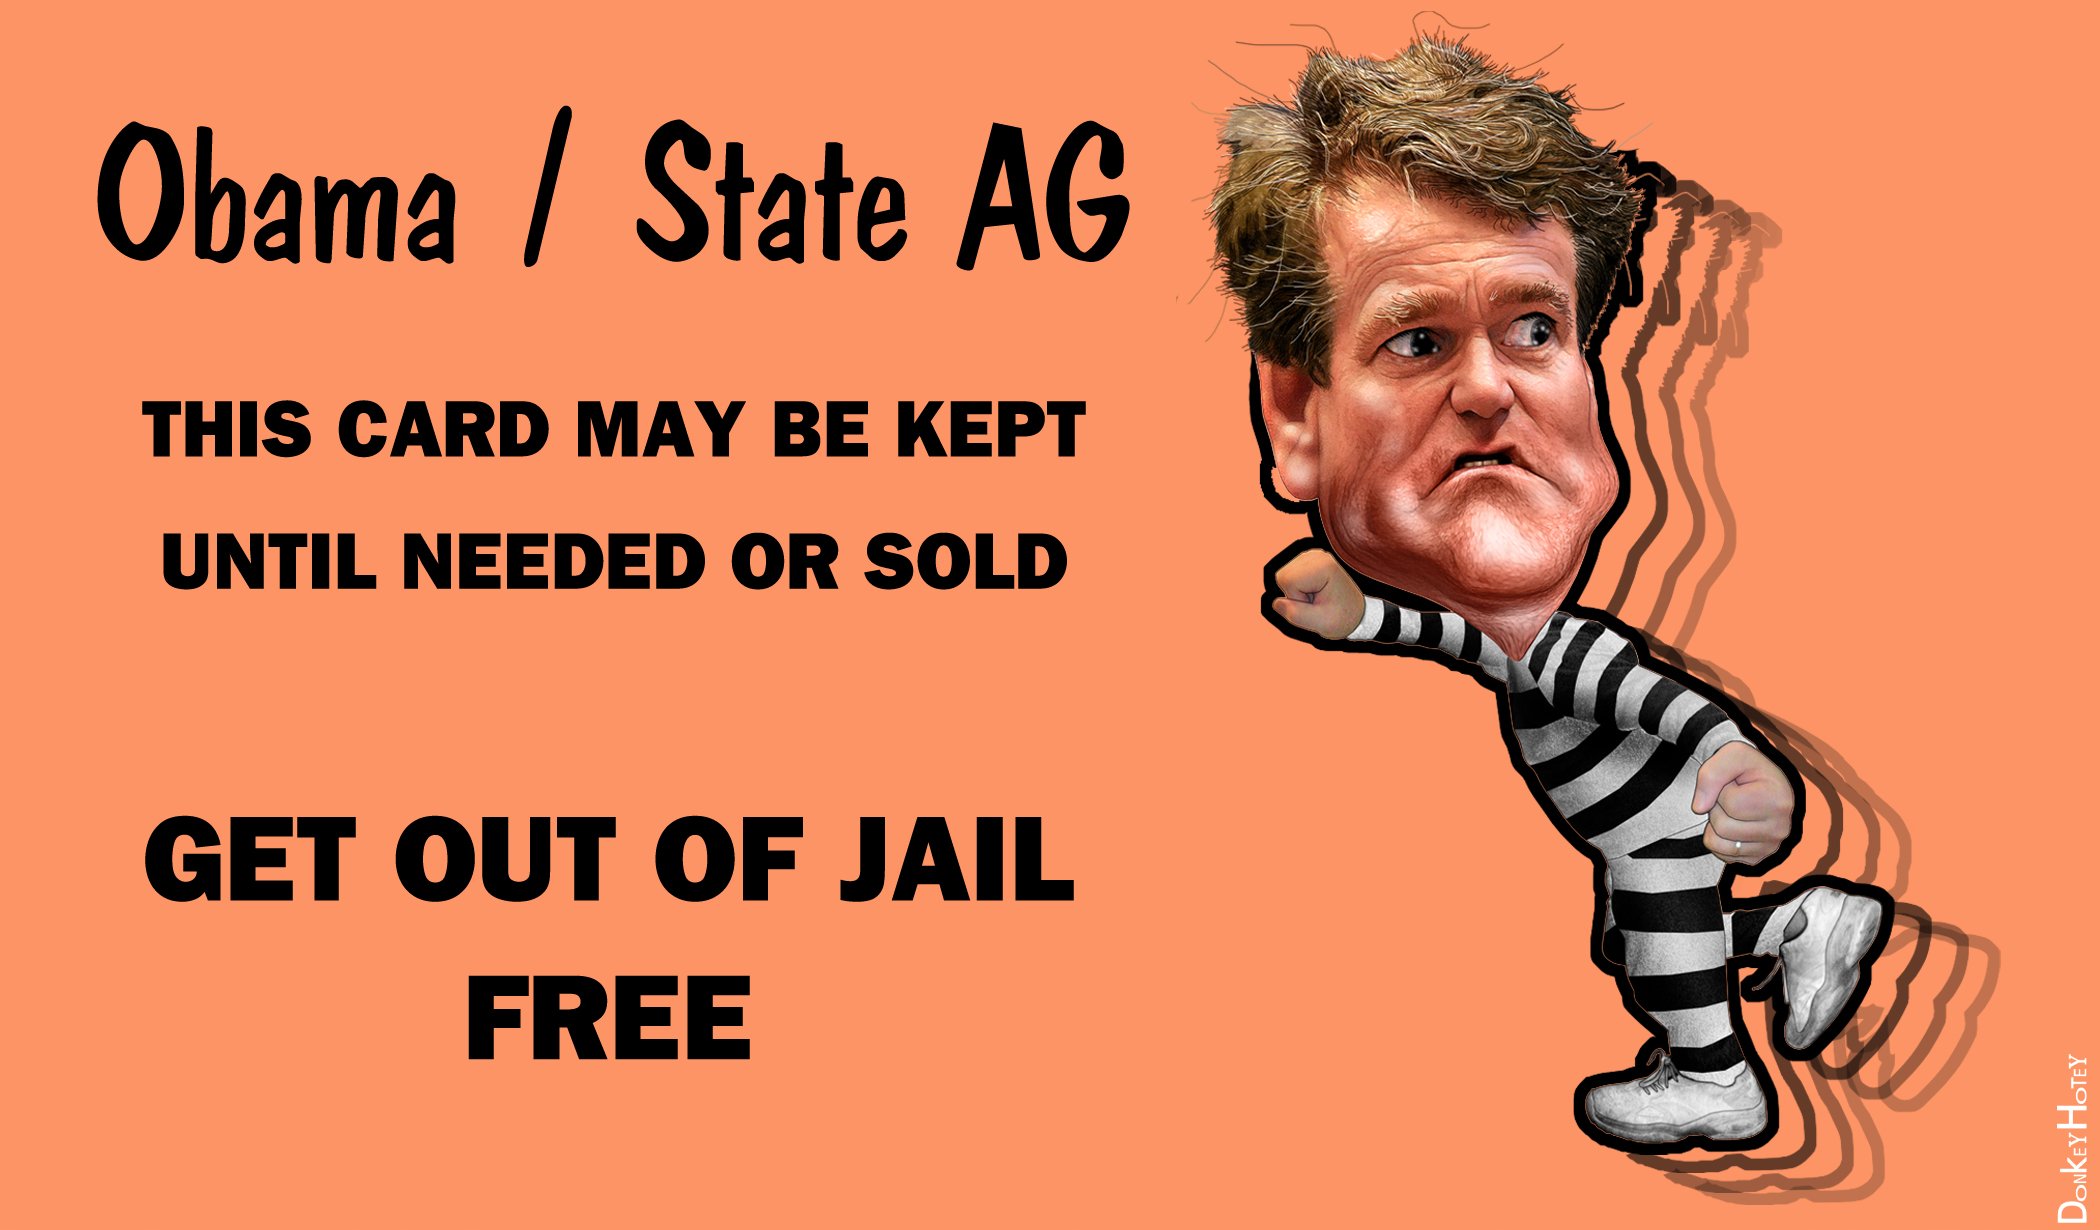 Banks_Get_Out_of_Jail_Free_Card_Moynihan_2100x1230.jpg